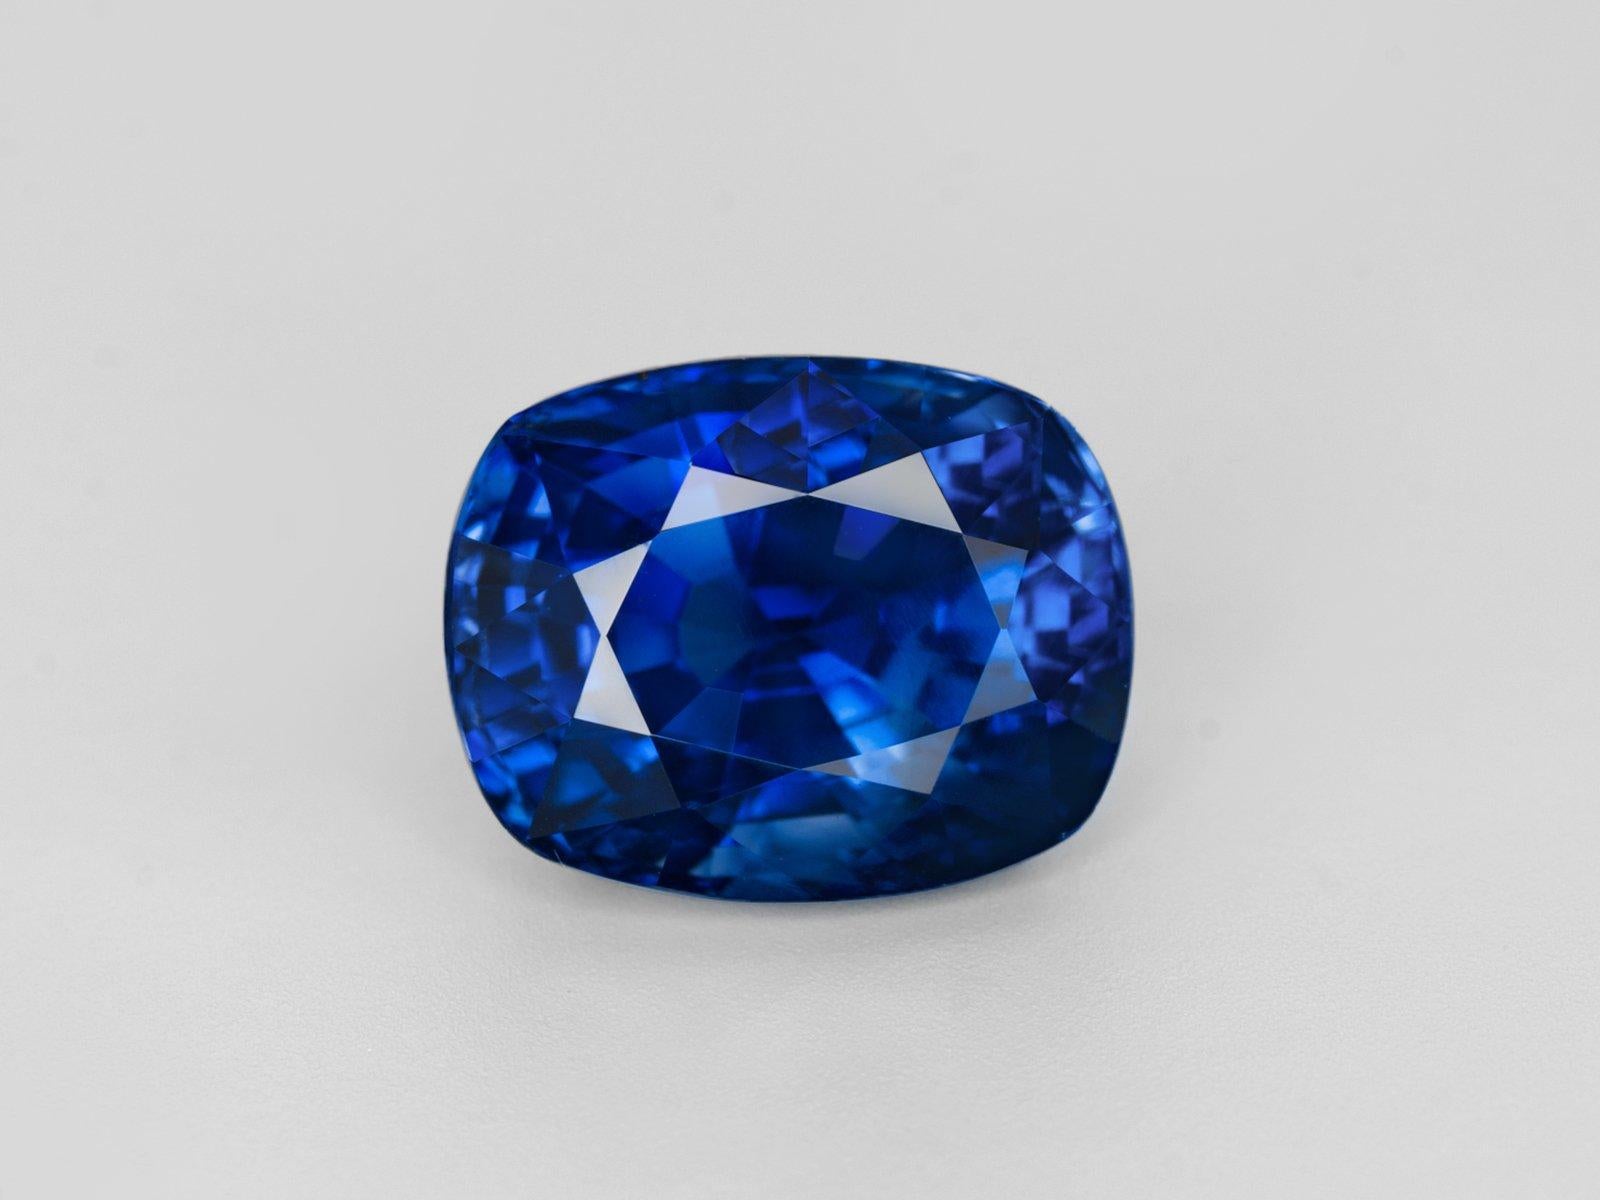 5 carat blue sapphire ring